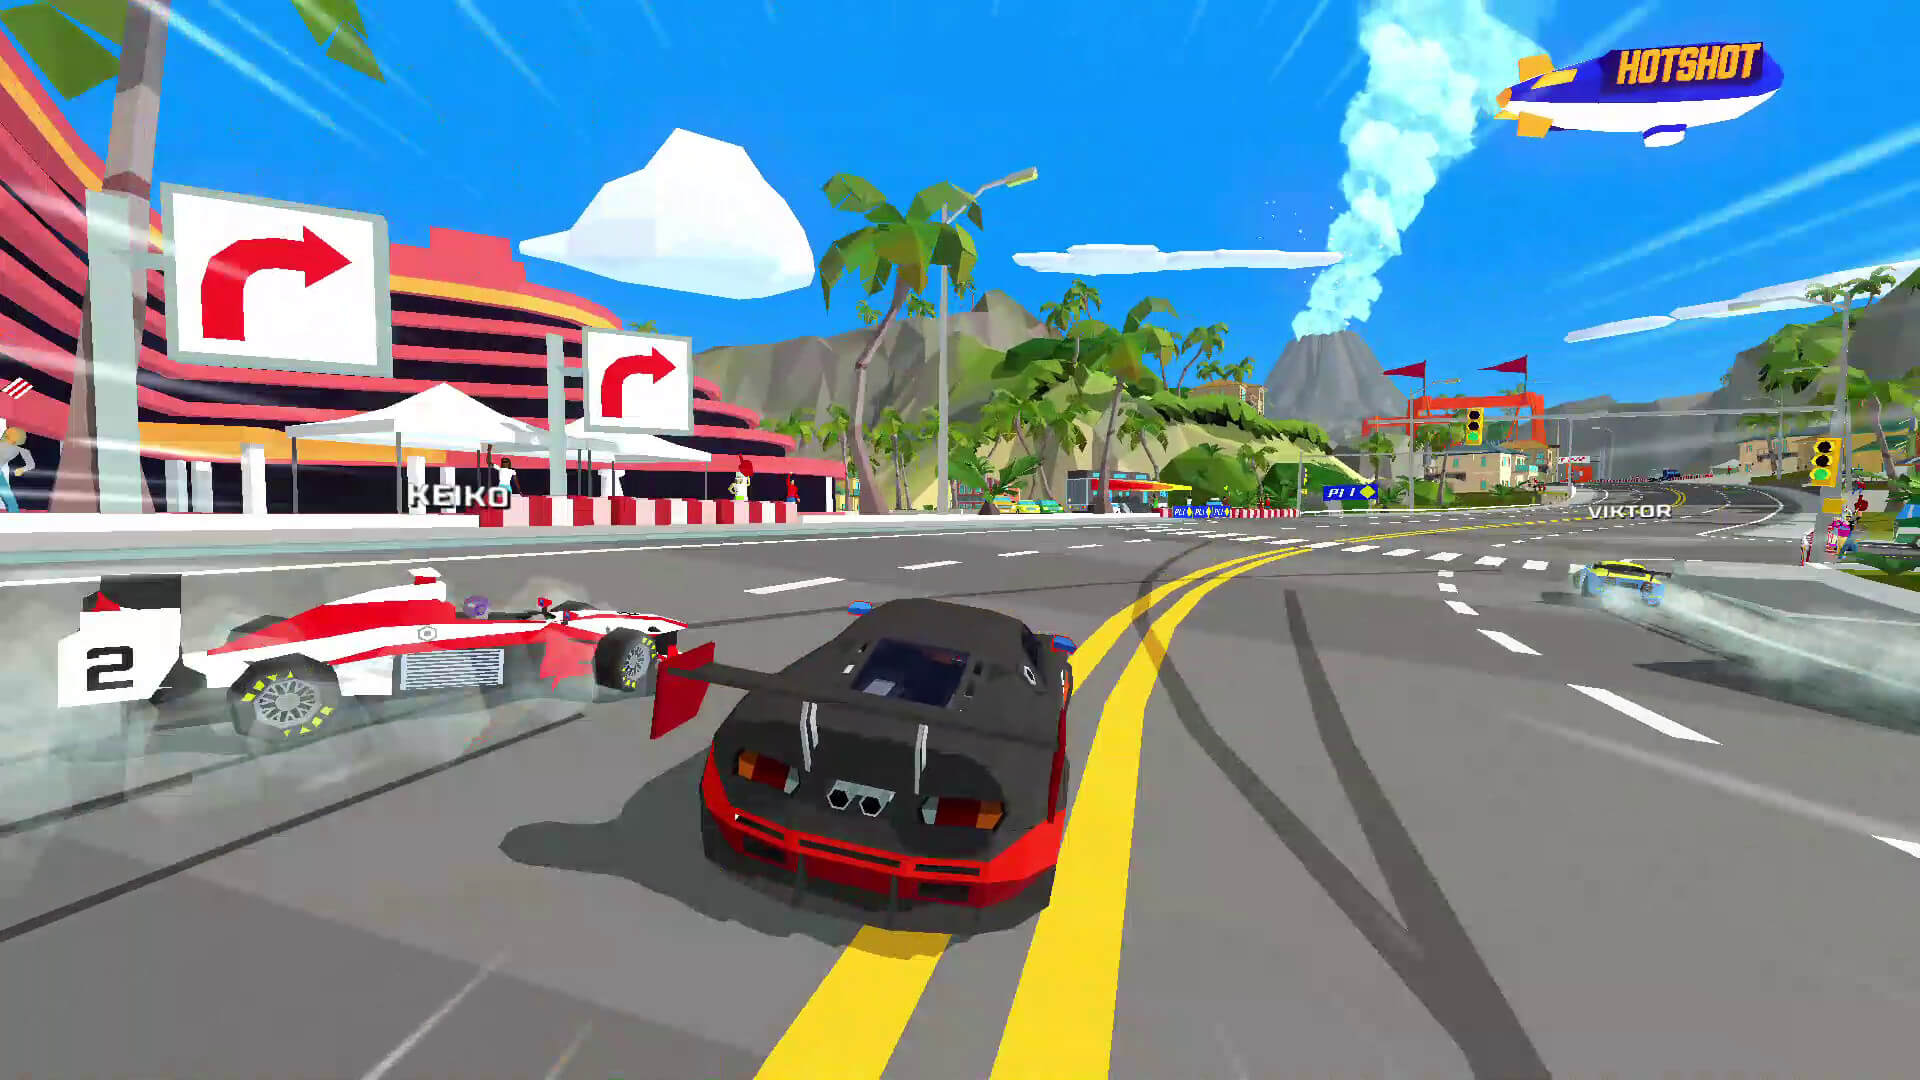 Retro-inspired racing game, Hotshot Racing, is coming to ...